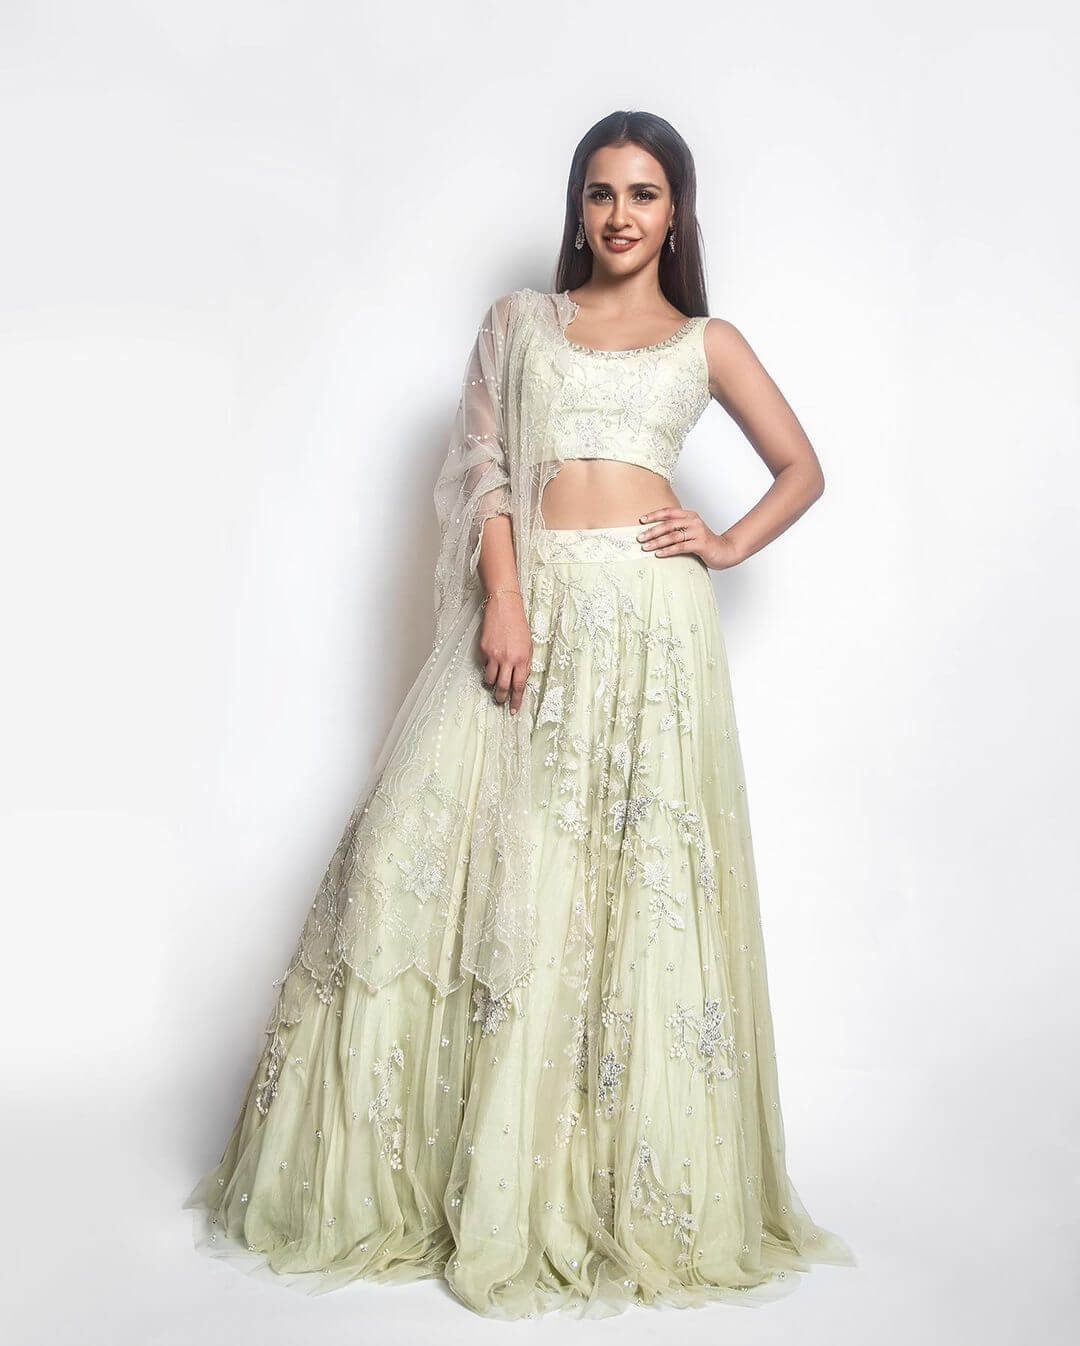 Aisha Sharma Classy Look In White Lehenga Outfit Aisha Sharma Chic Looks And Outfit